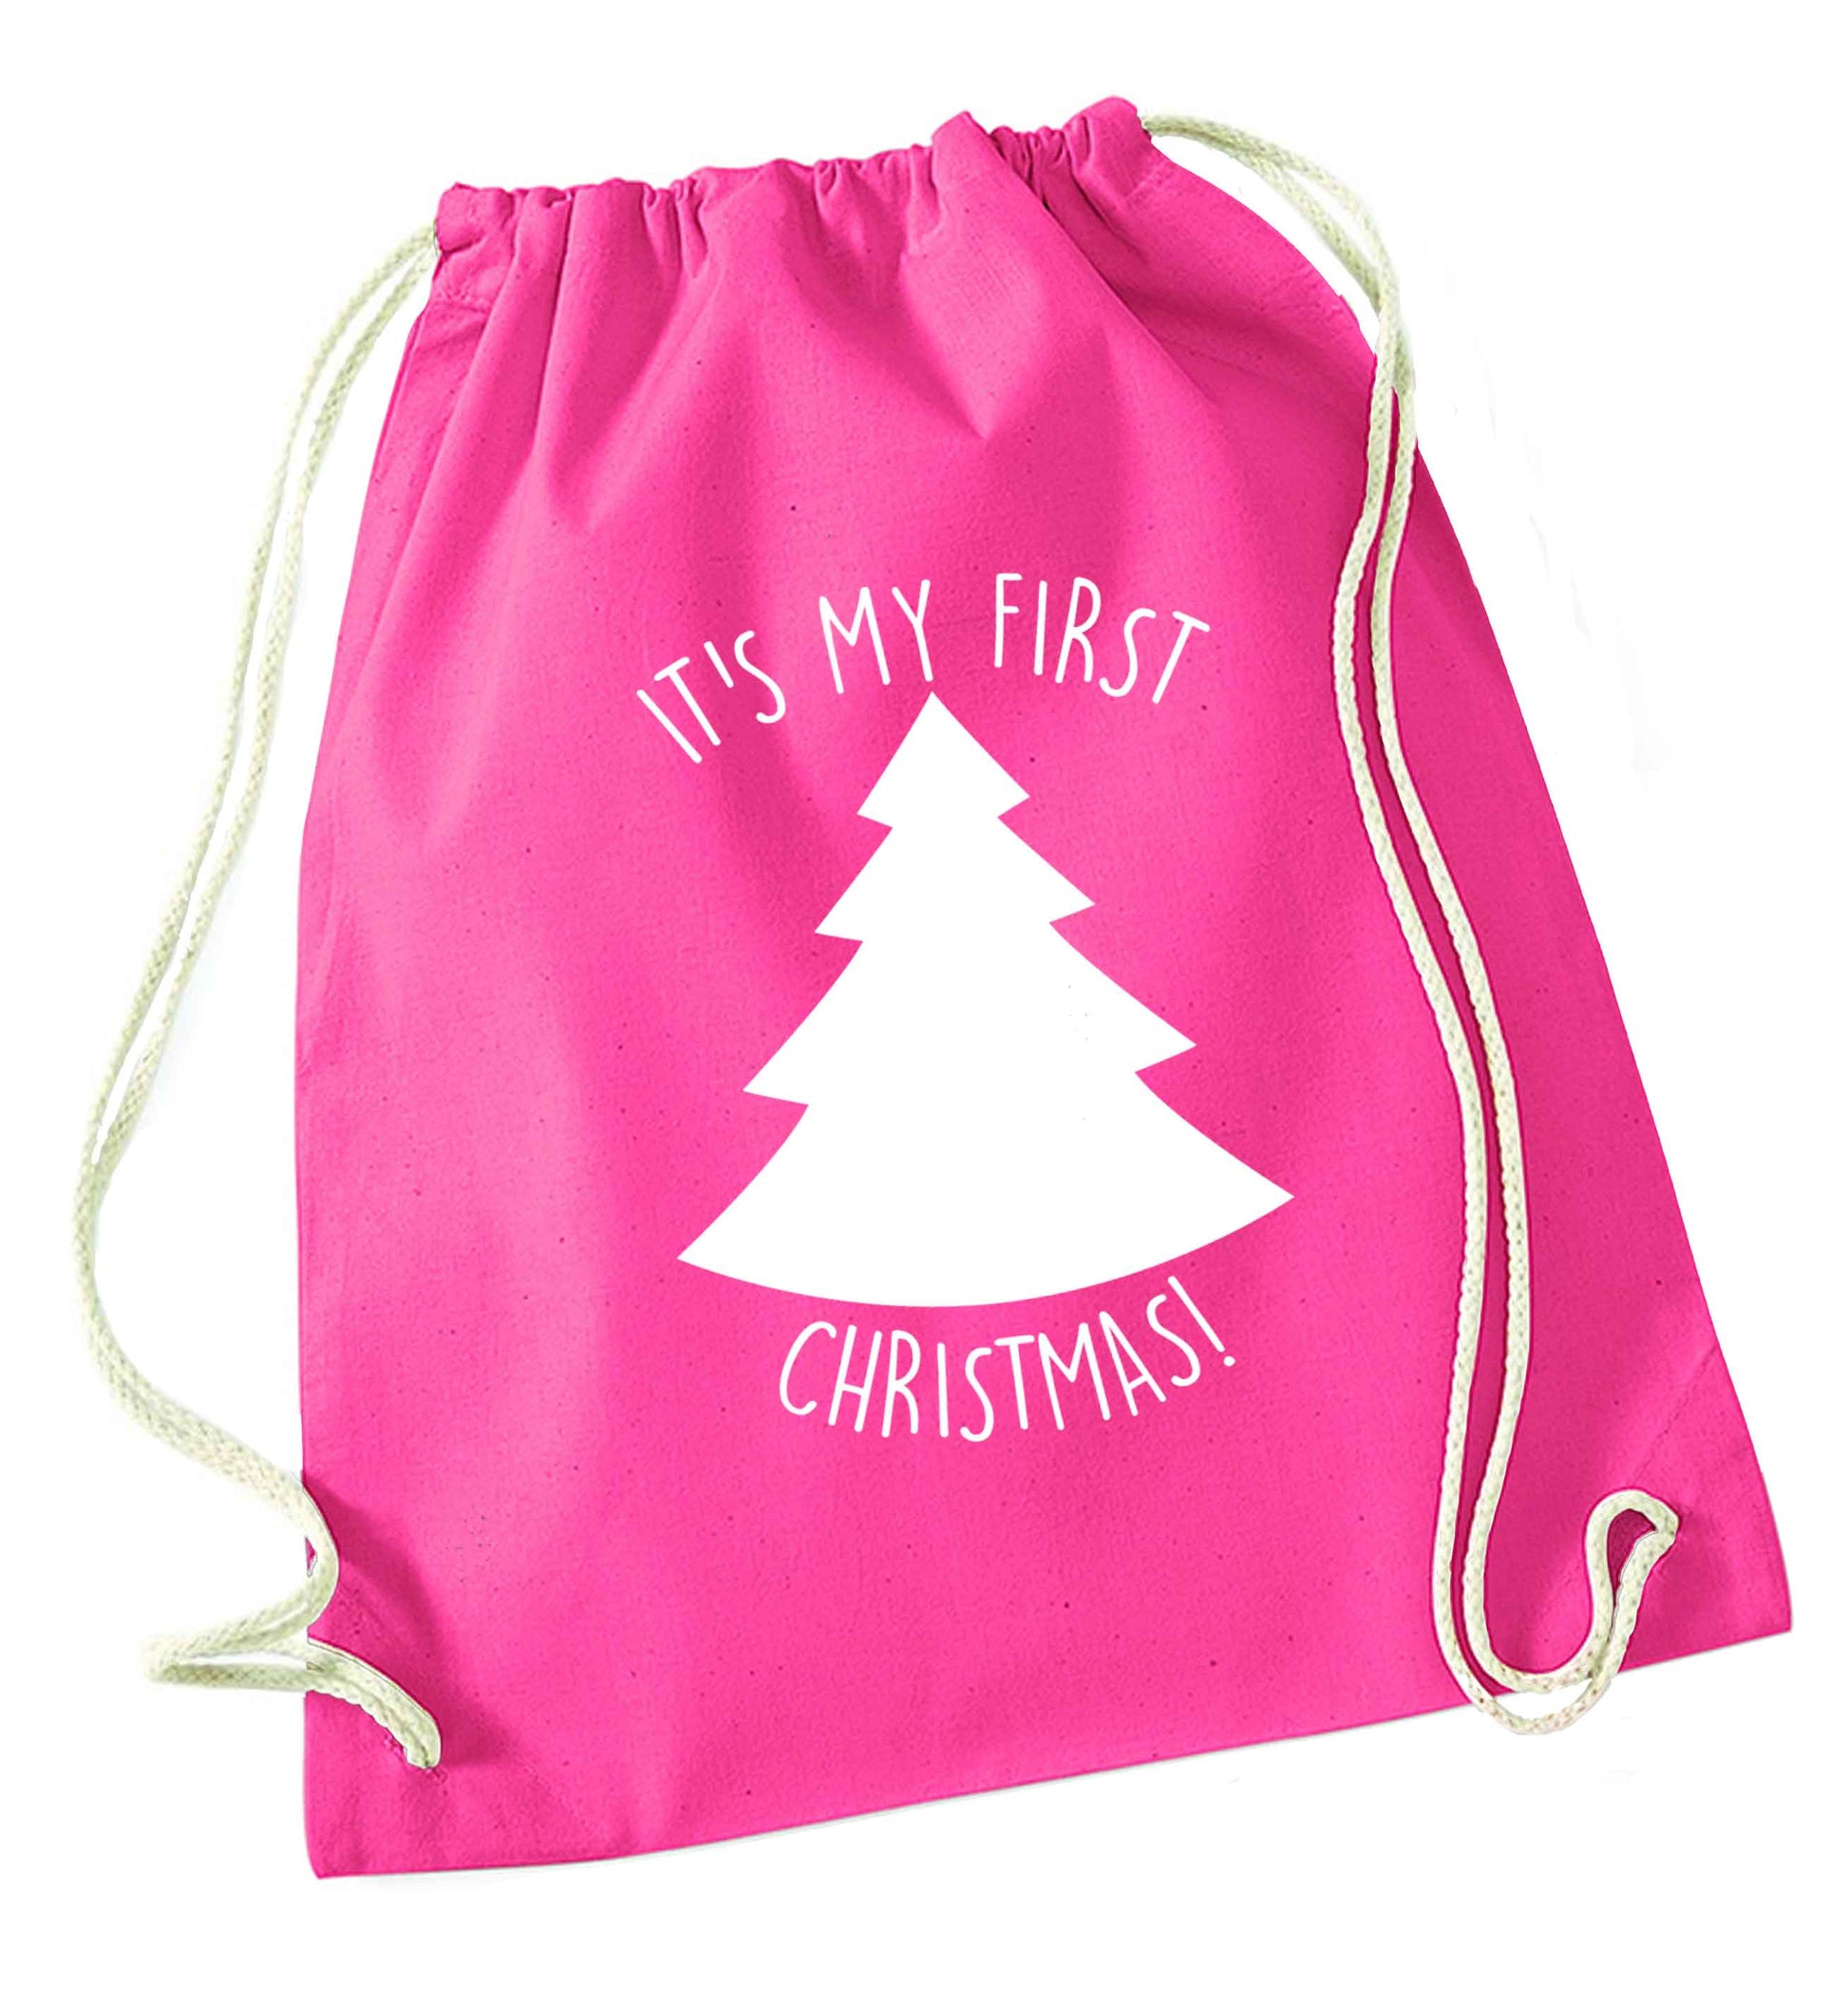 It's my first Christmas - tree pink drawstring bag